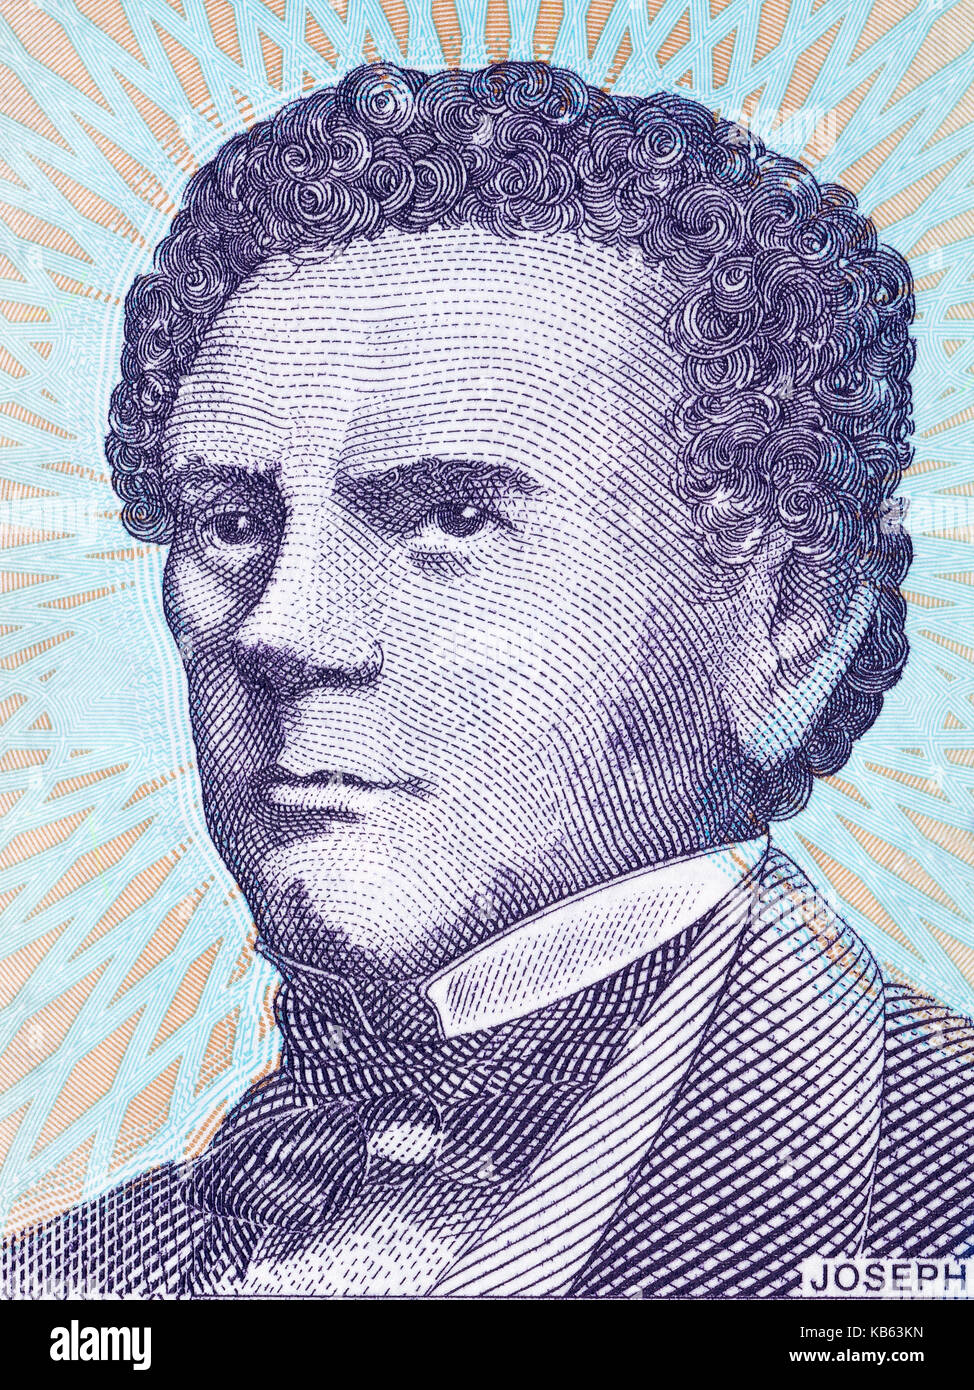 Joseph jenkins roberts retrato de dólares liberianos Foto de stock